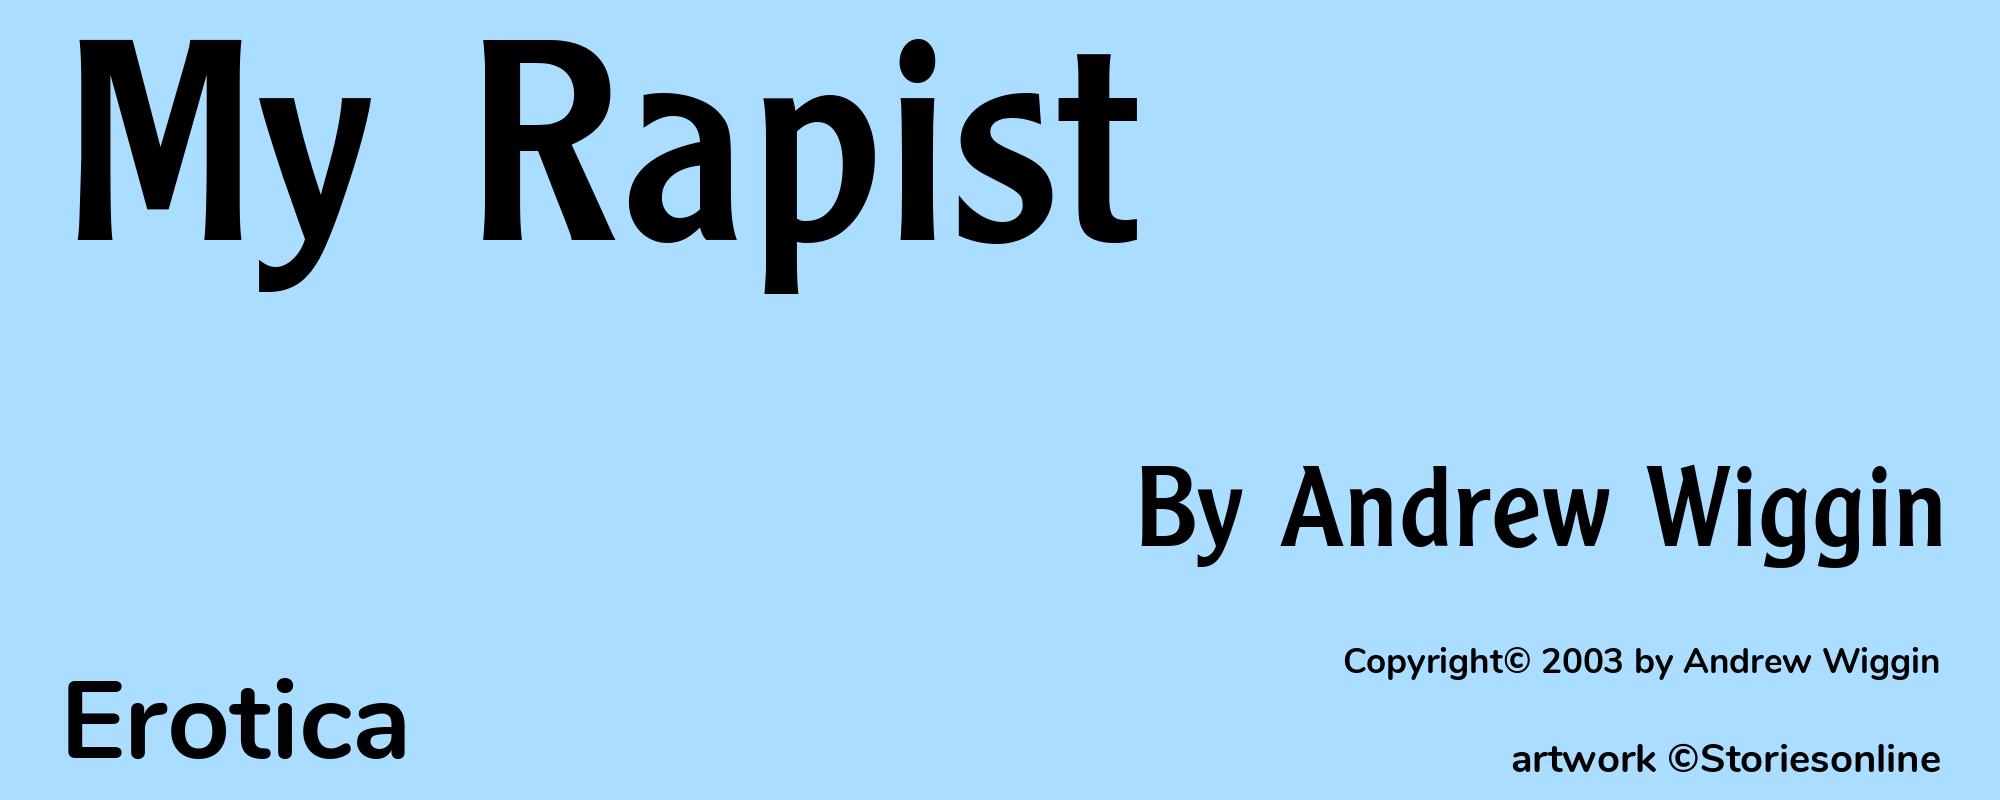 My Rapist - Cover